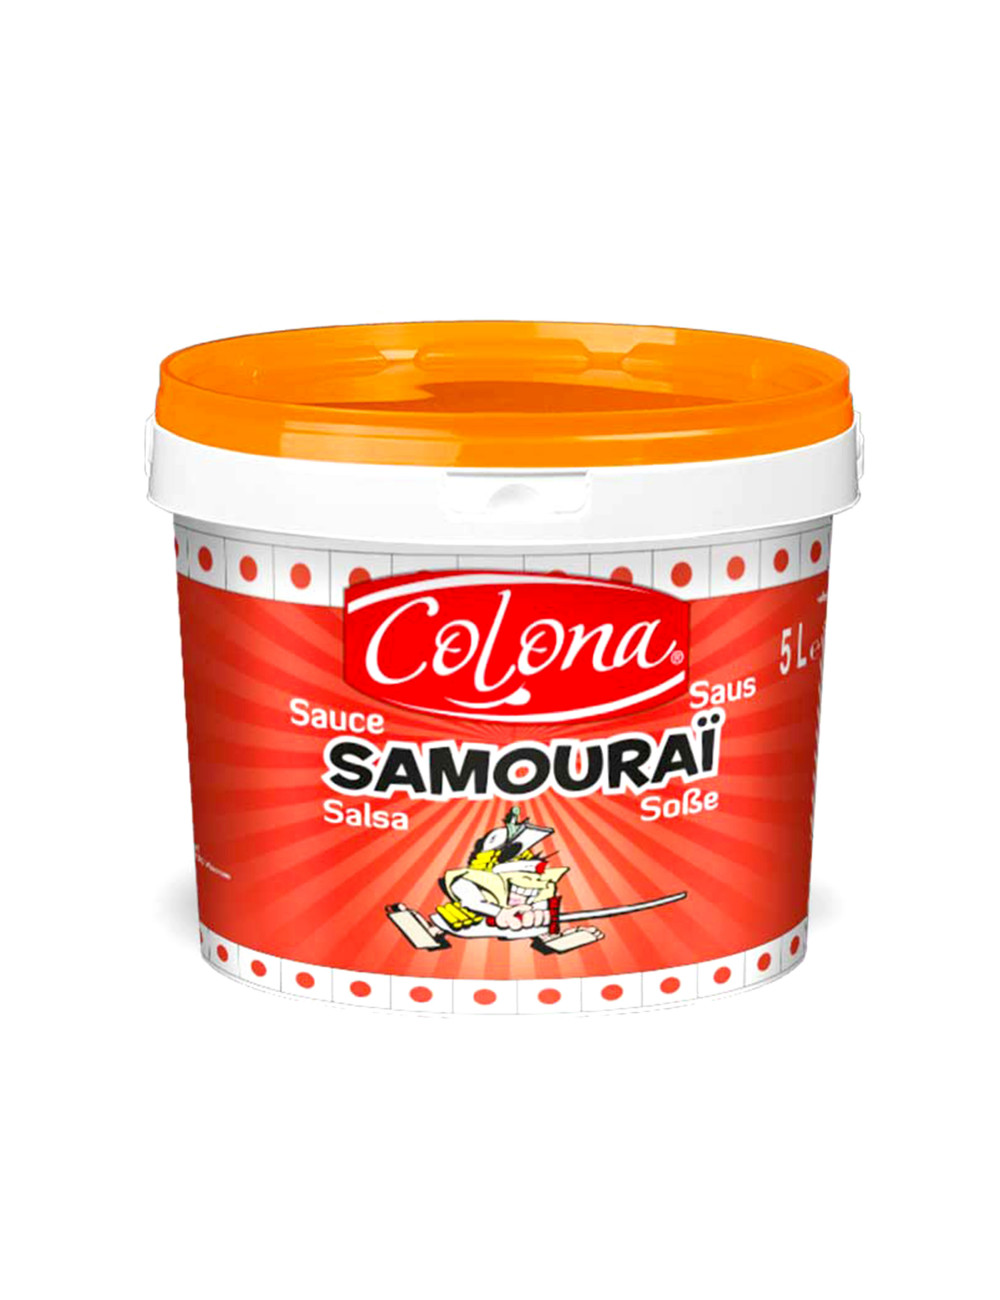 https://sdfoods.fr/85-large_default/colona-samourai-sauce-5l.jpg